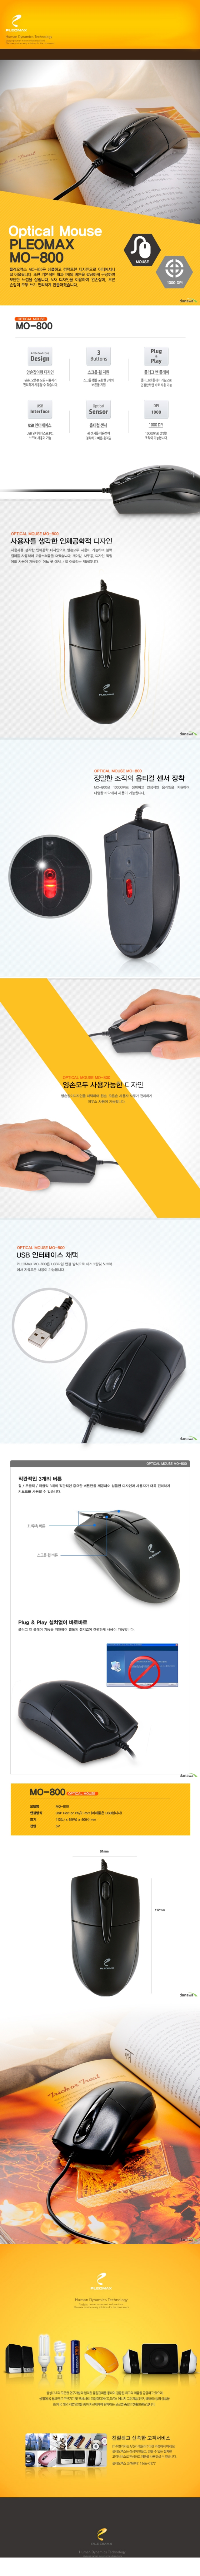 PLEOMAX MO-800 USB-상세.png